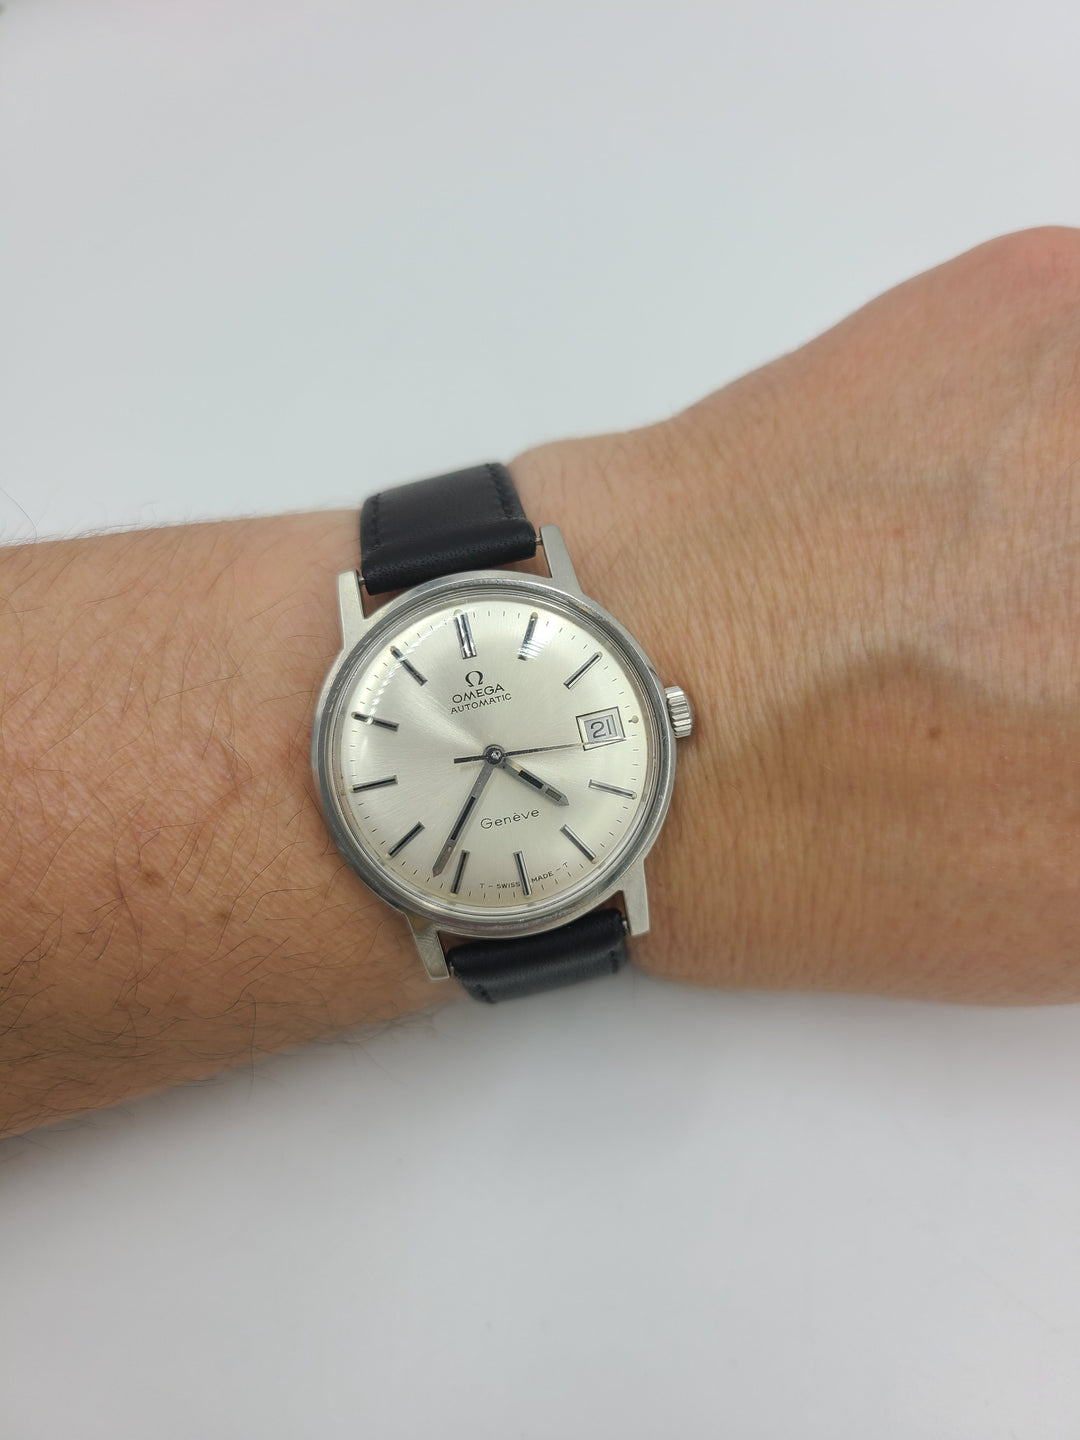 k751 Handsome Men's Vintage Automatic Omega Wristwatch